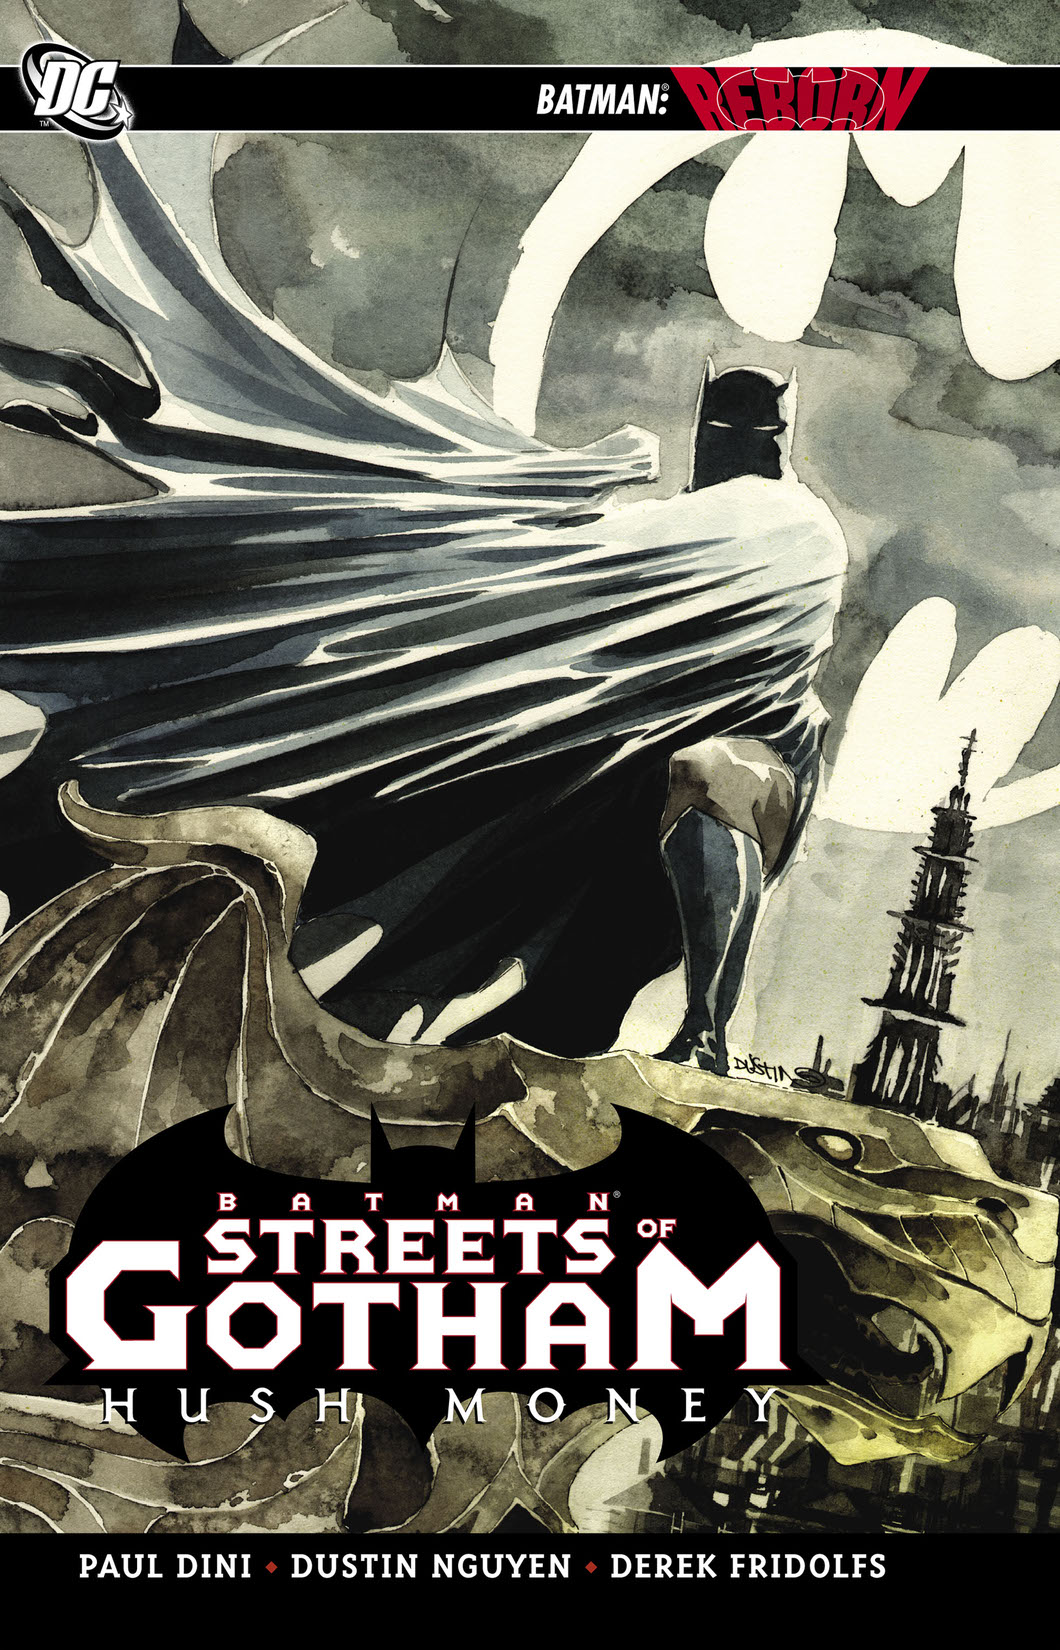 Batman: Streets of Gotham Vol. 1: Hush Money preview images